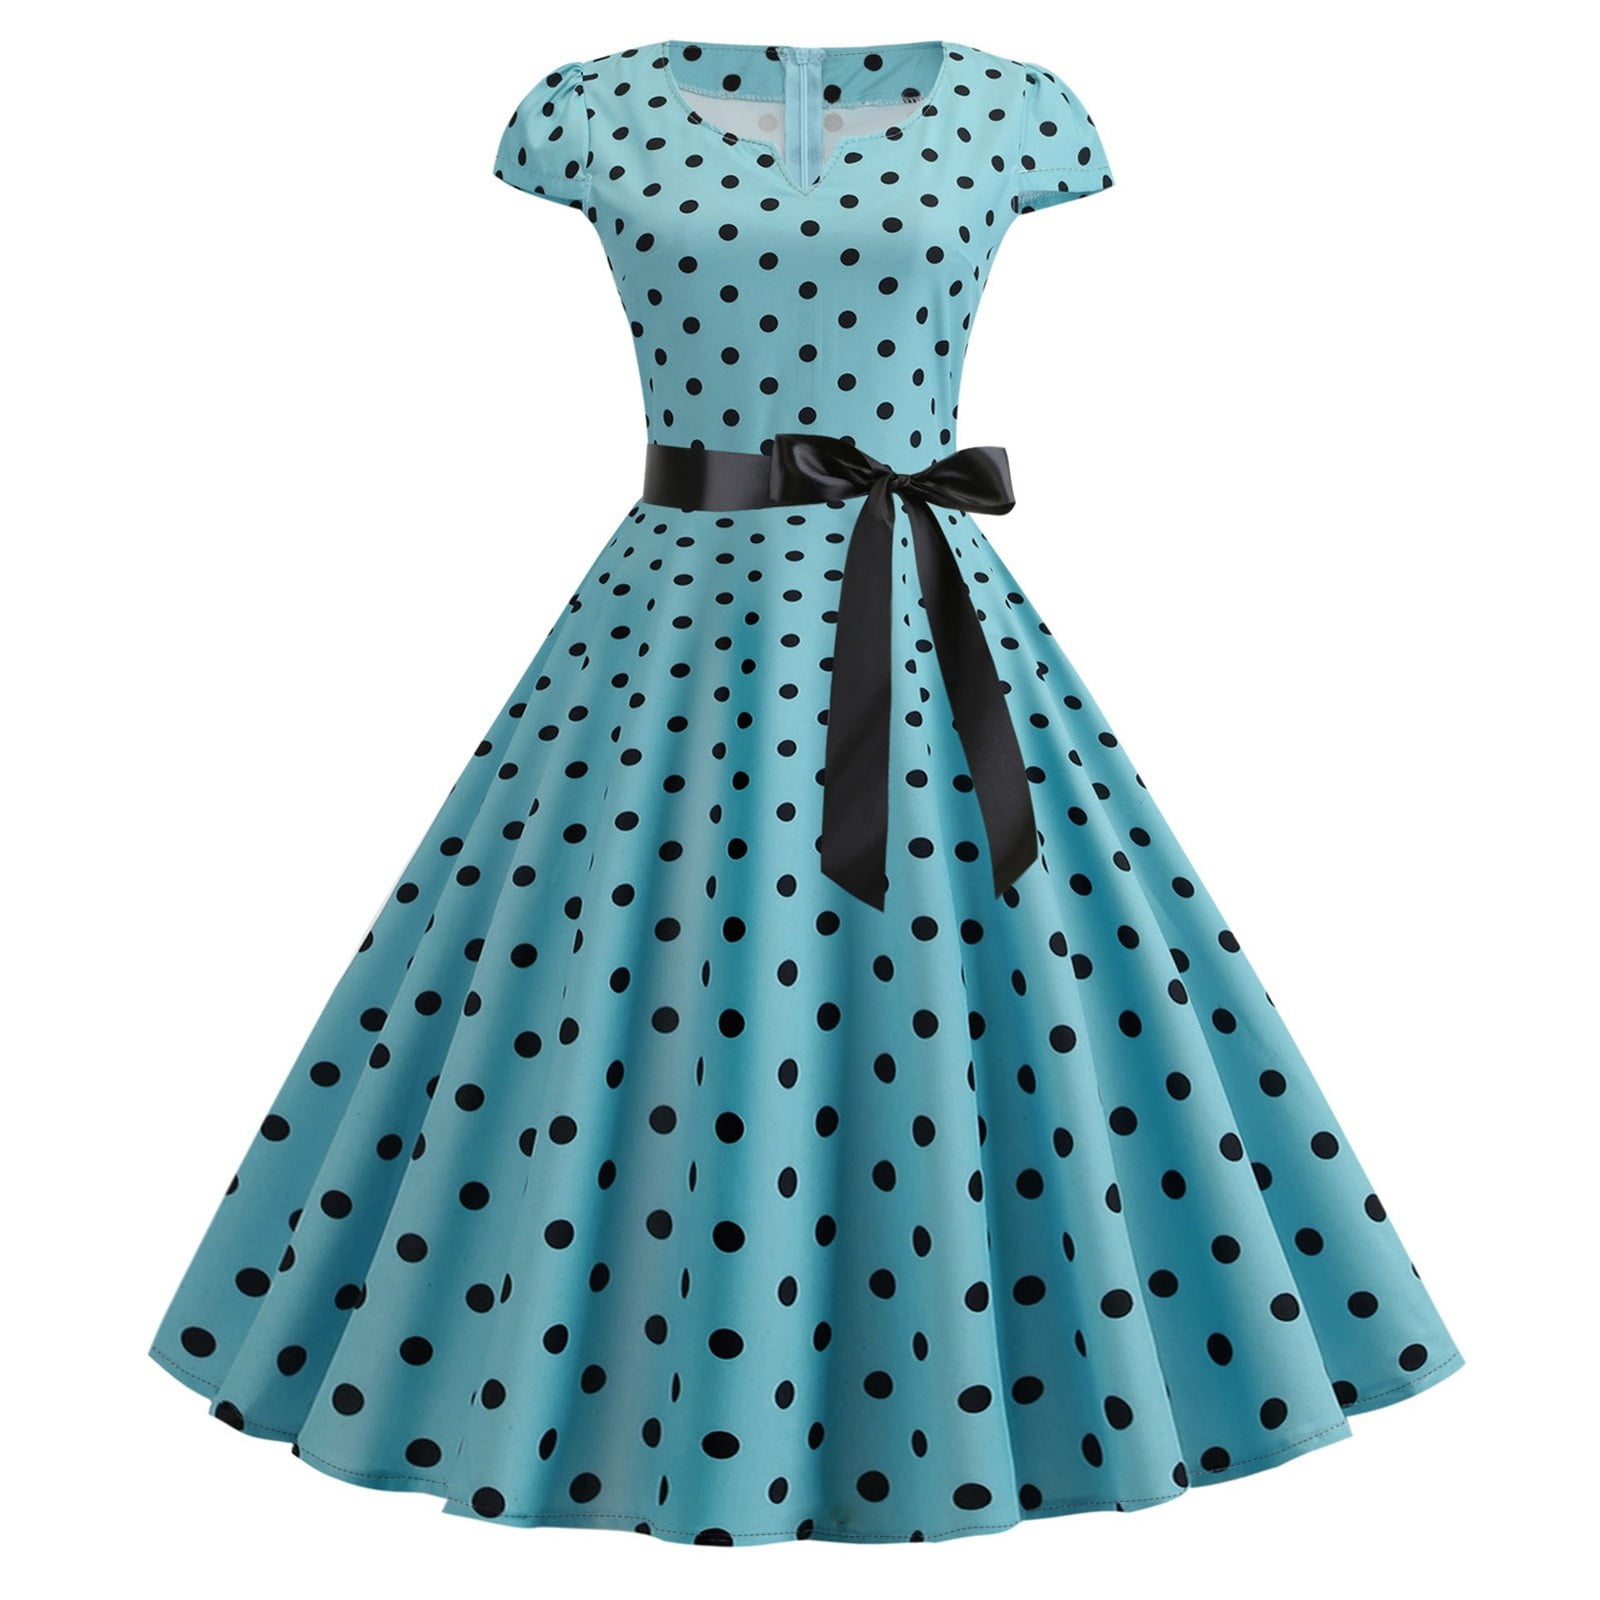 1950s housewife dress